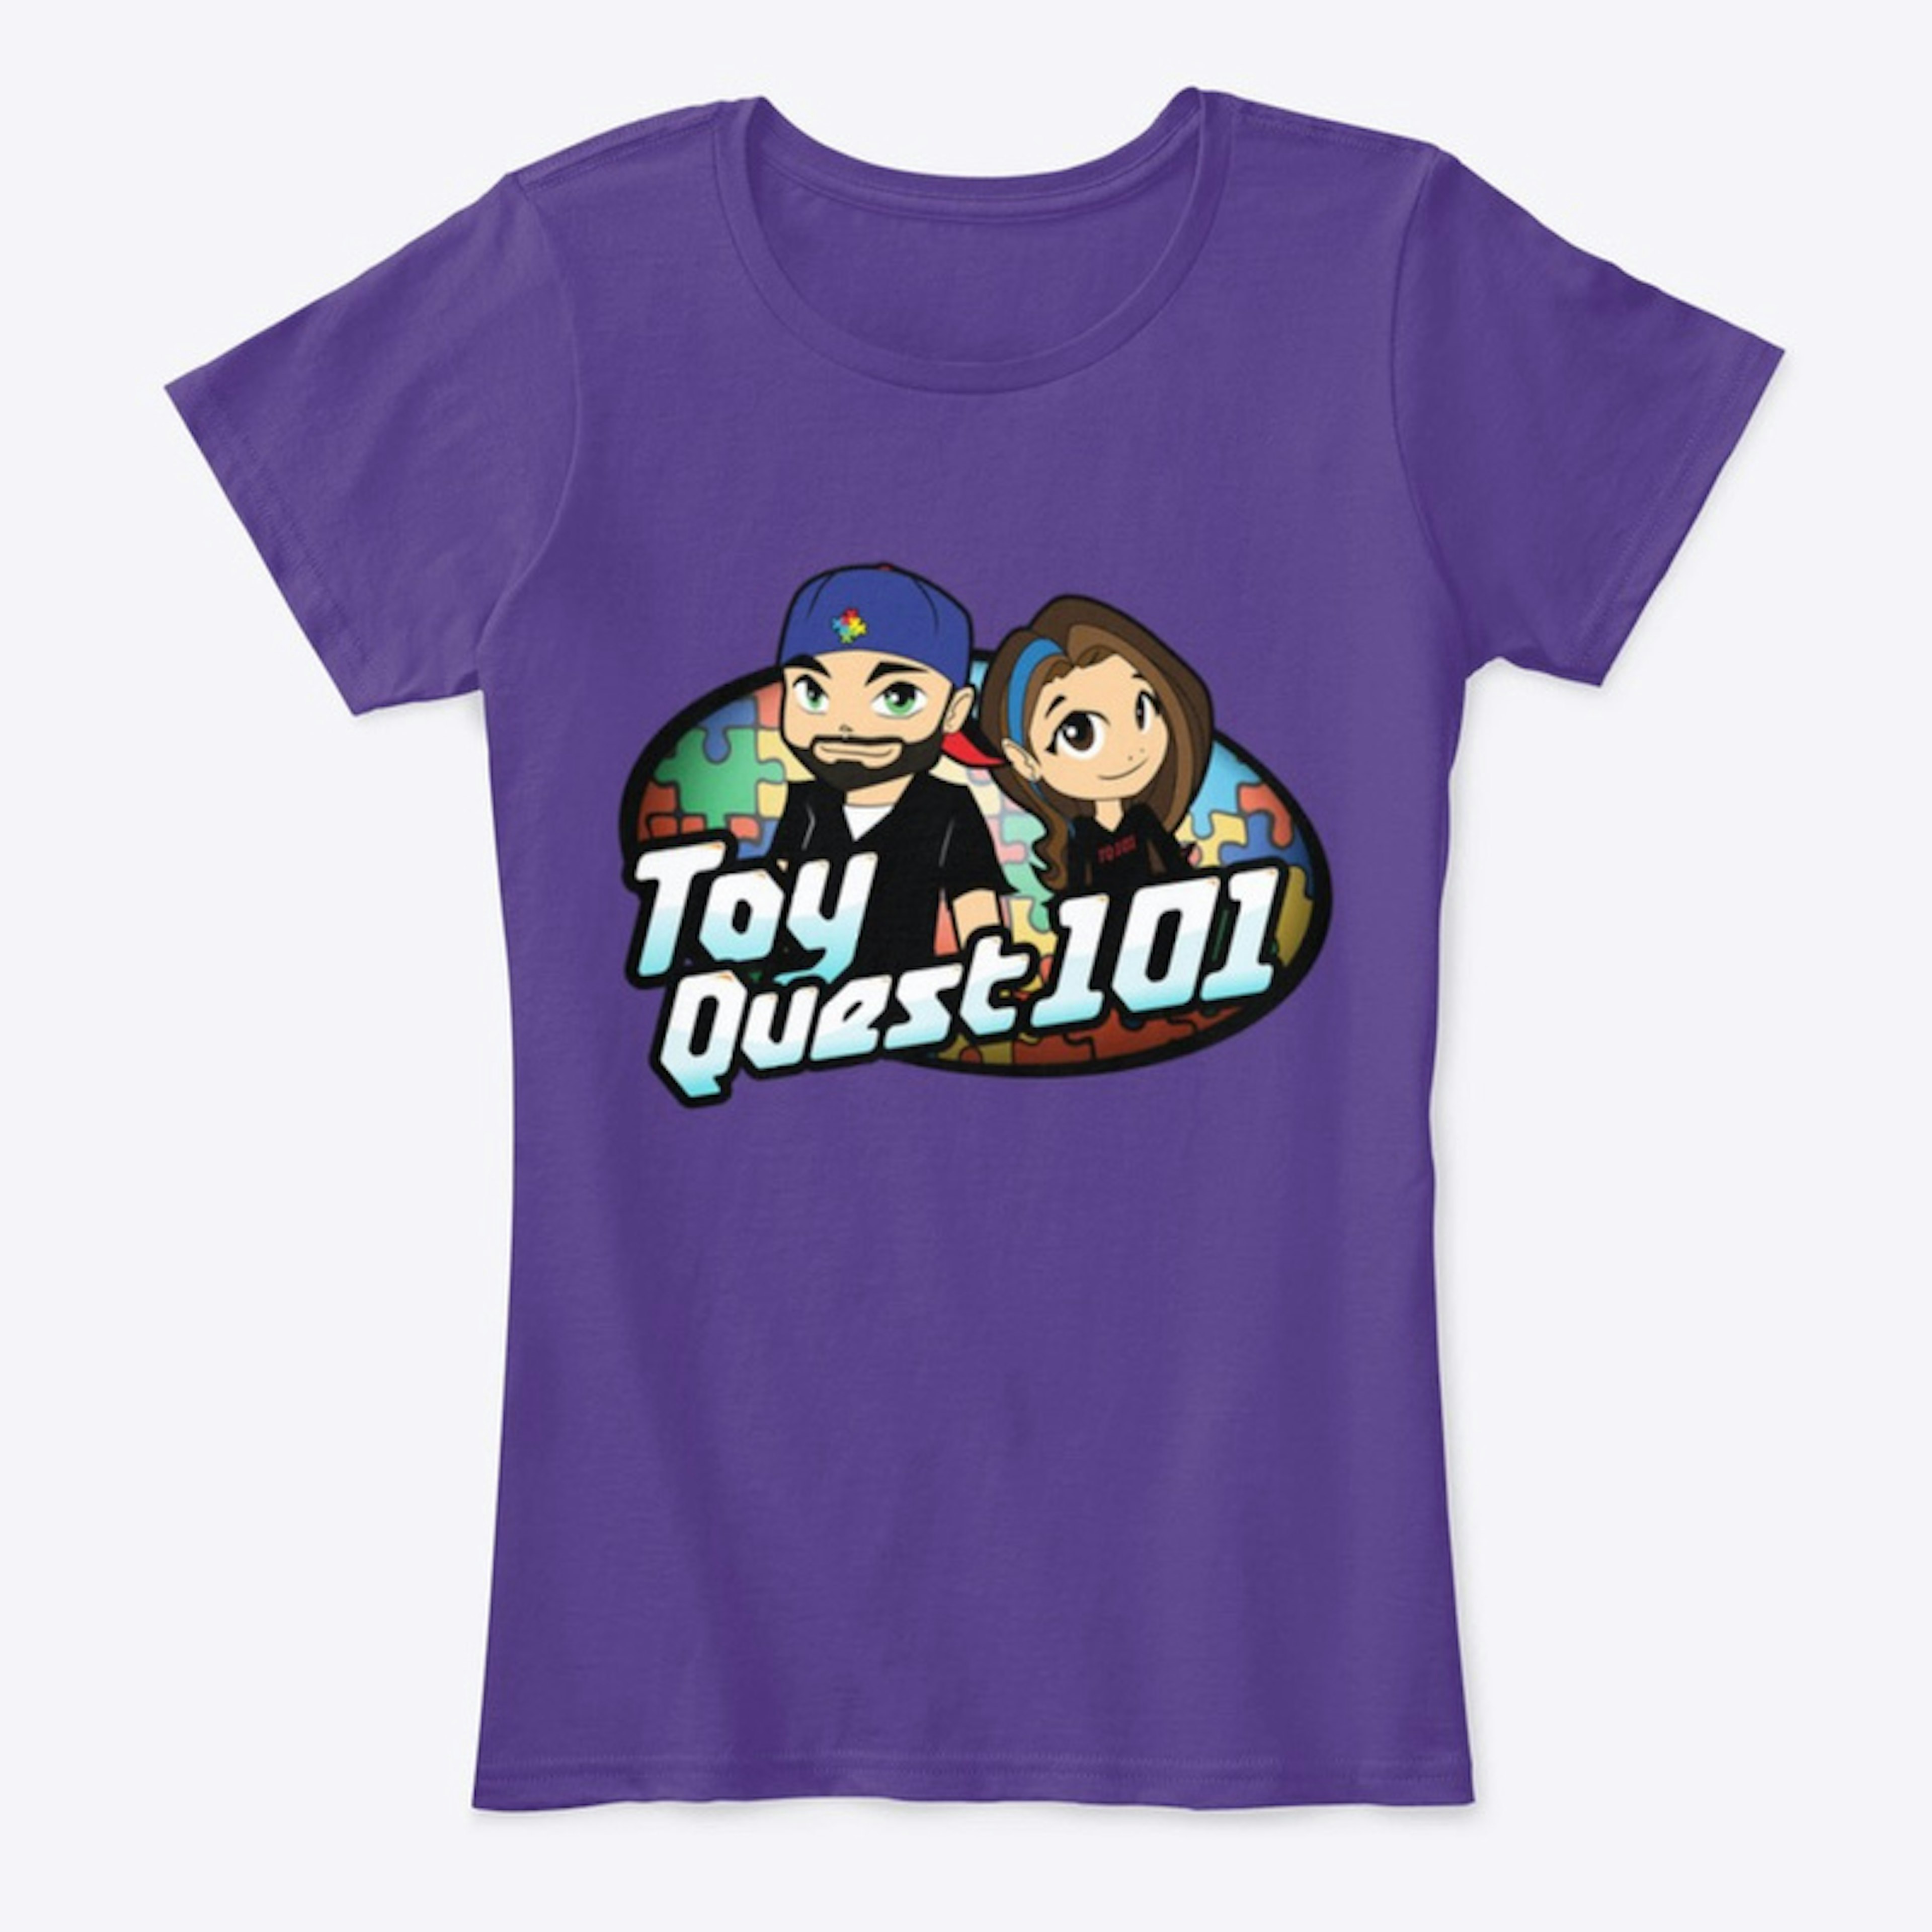 Toyquest101 Women's T-shirt B